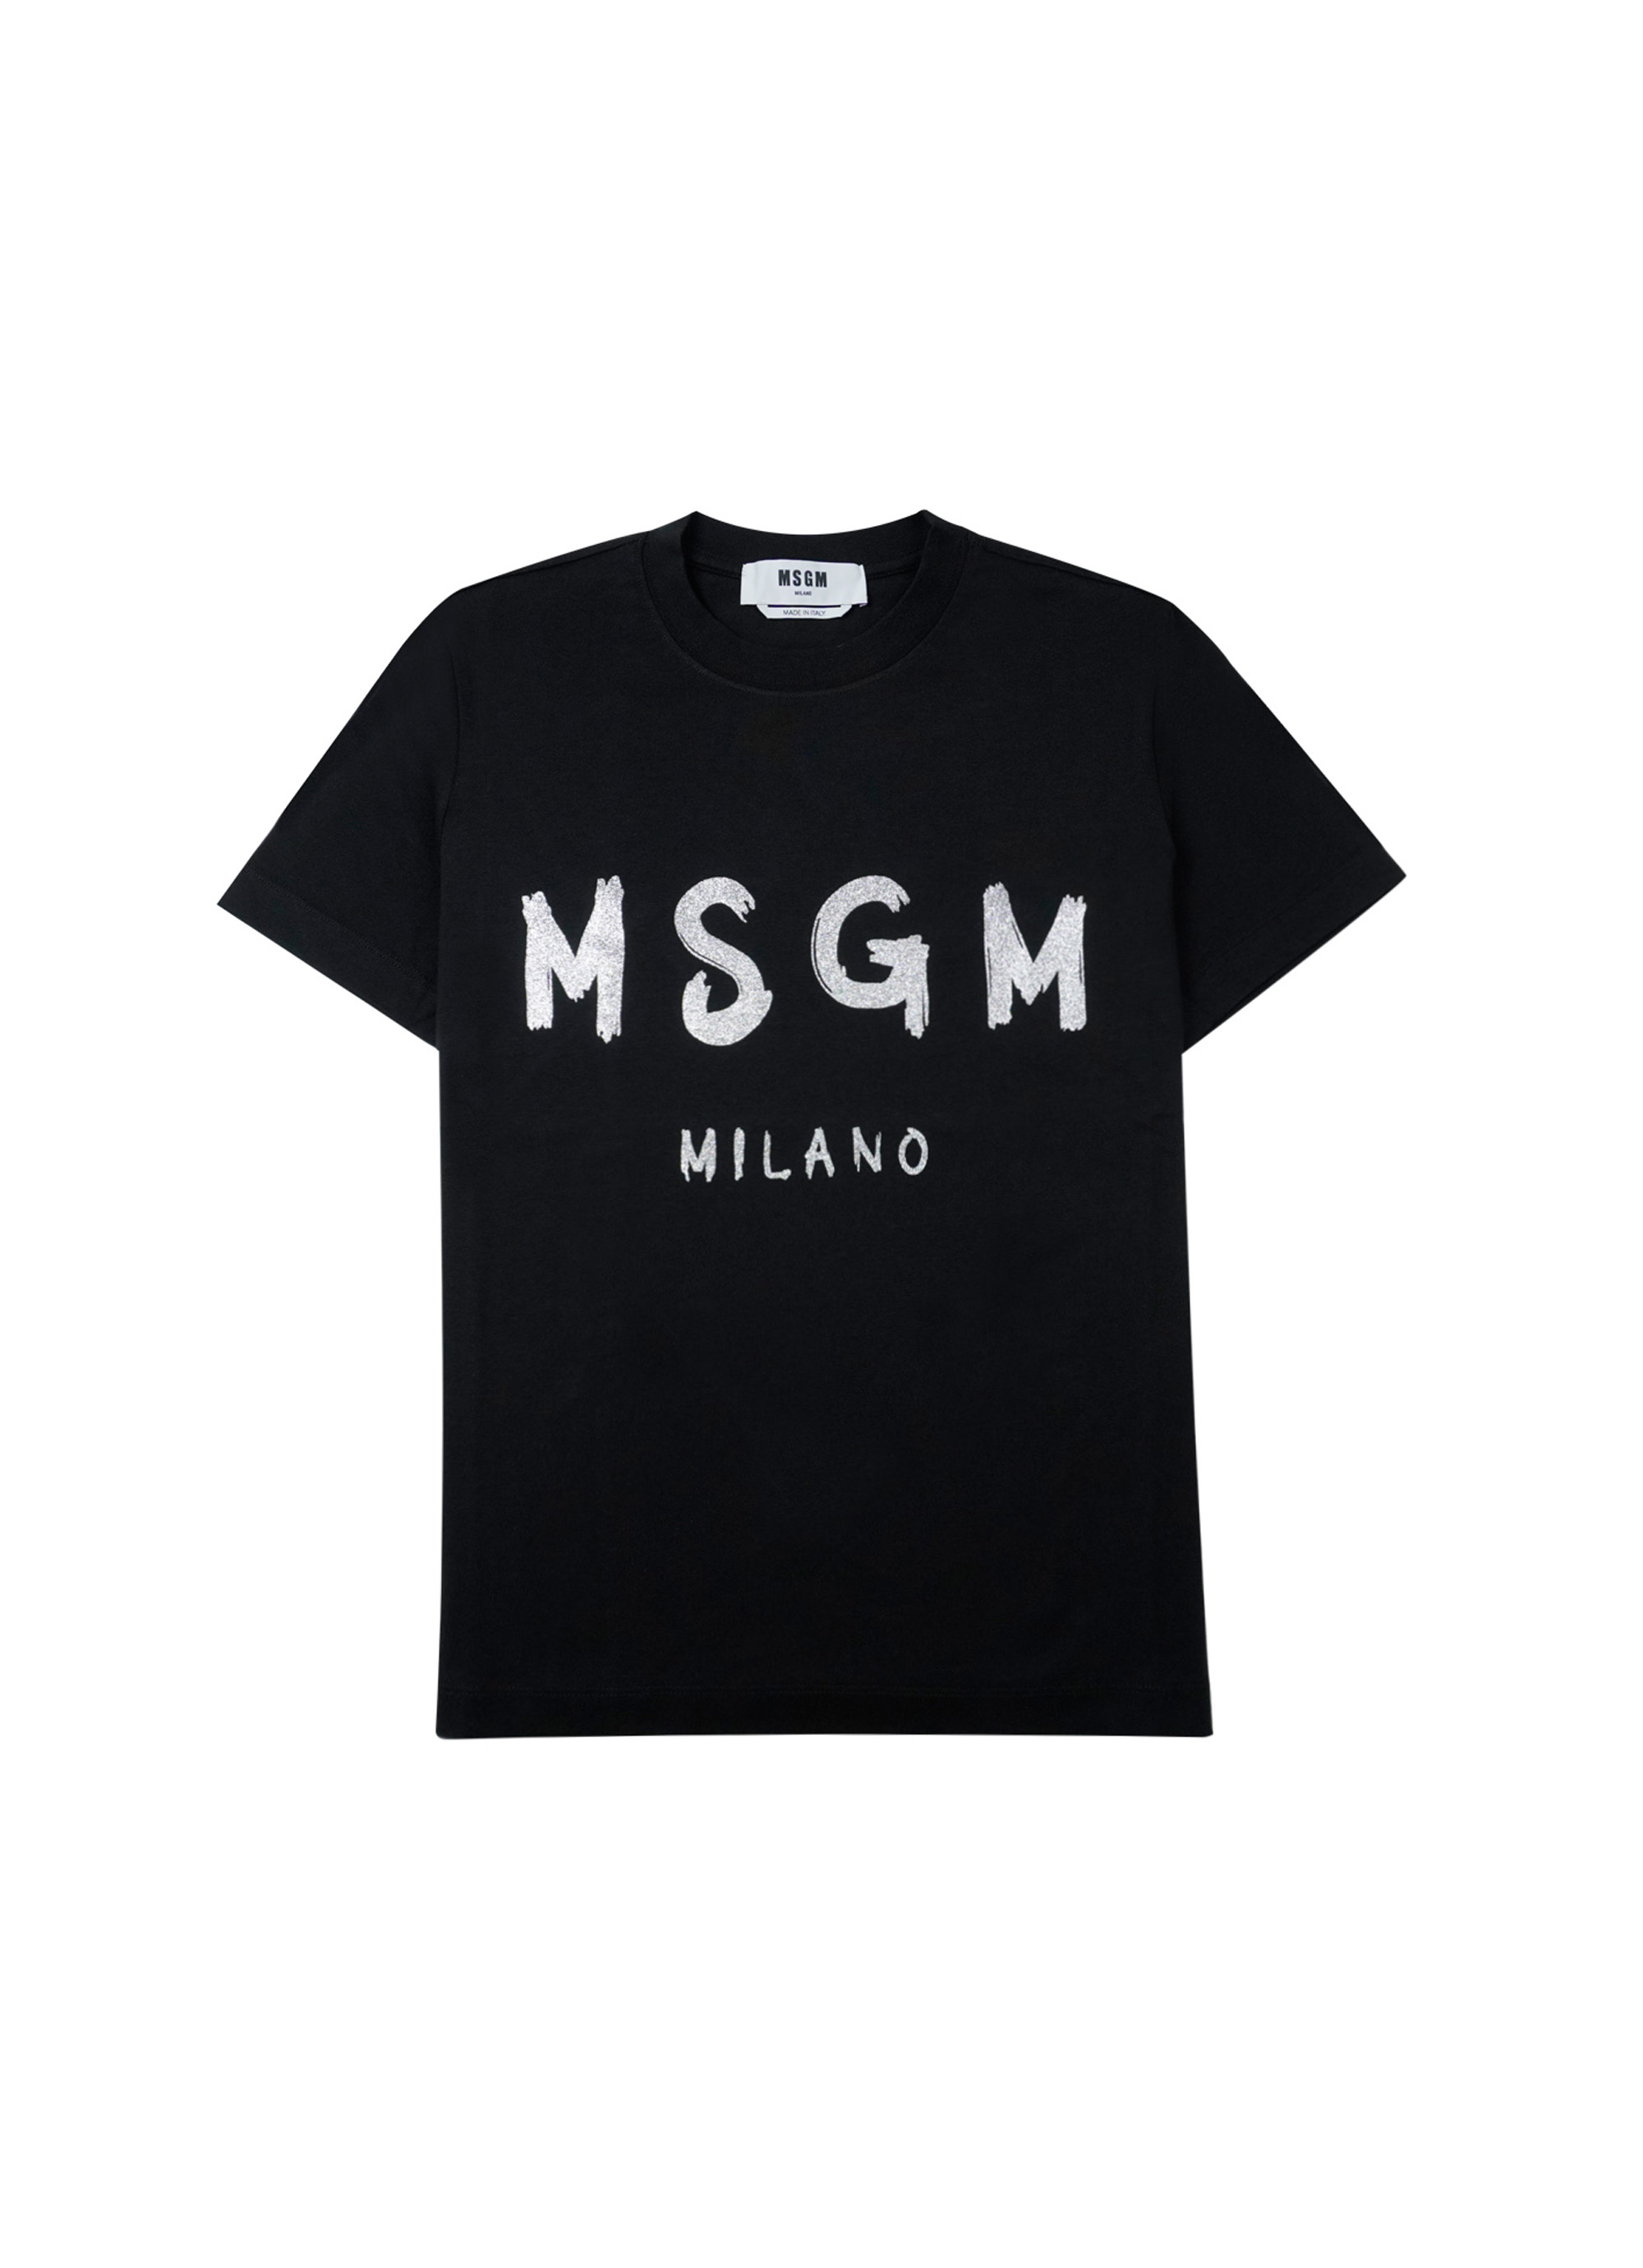 MSGM】 【【NEW】MSGM ブラッシュロゴTシャツ＜GLITTER SILVER PRINT